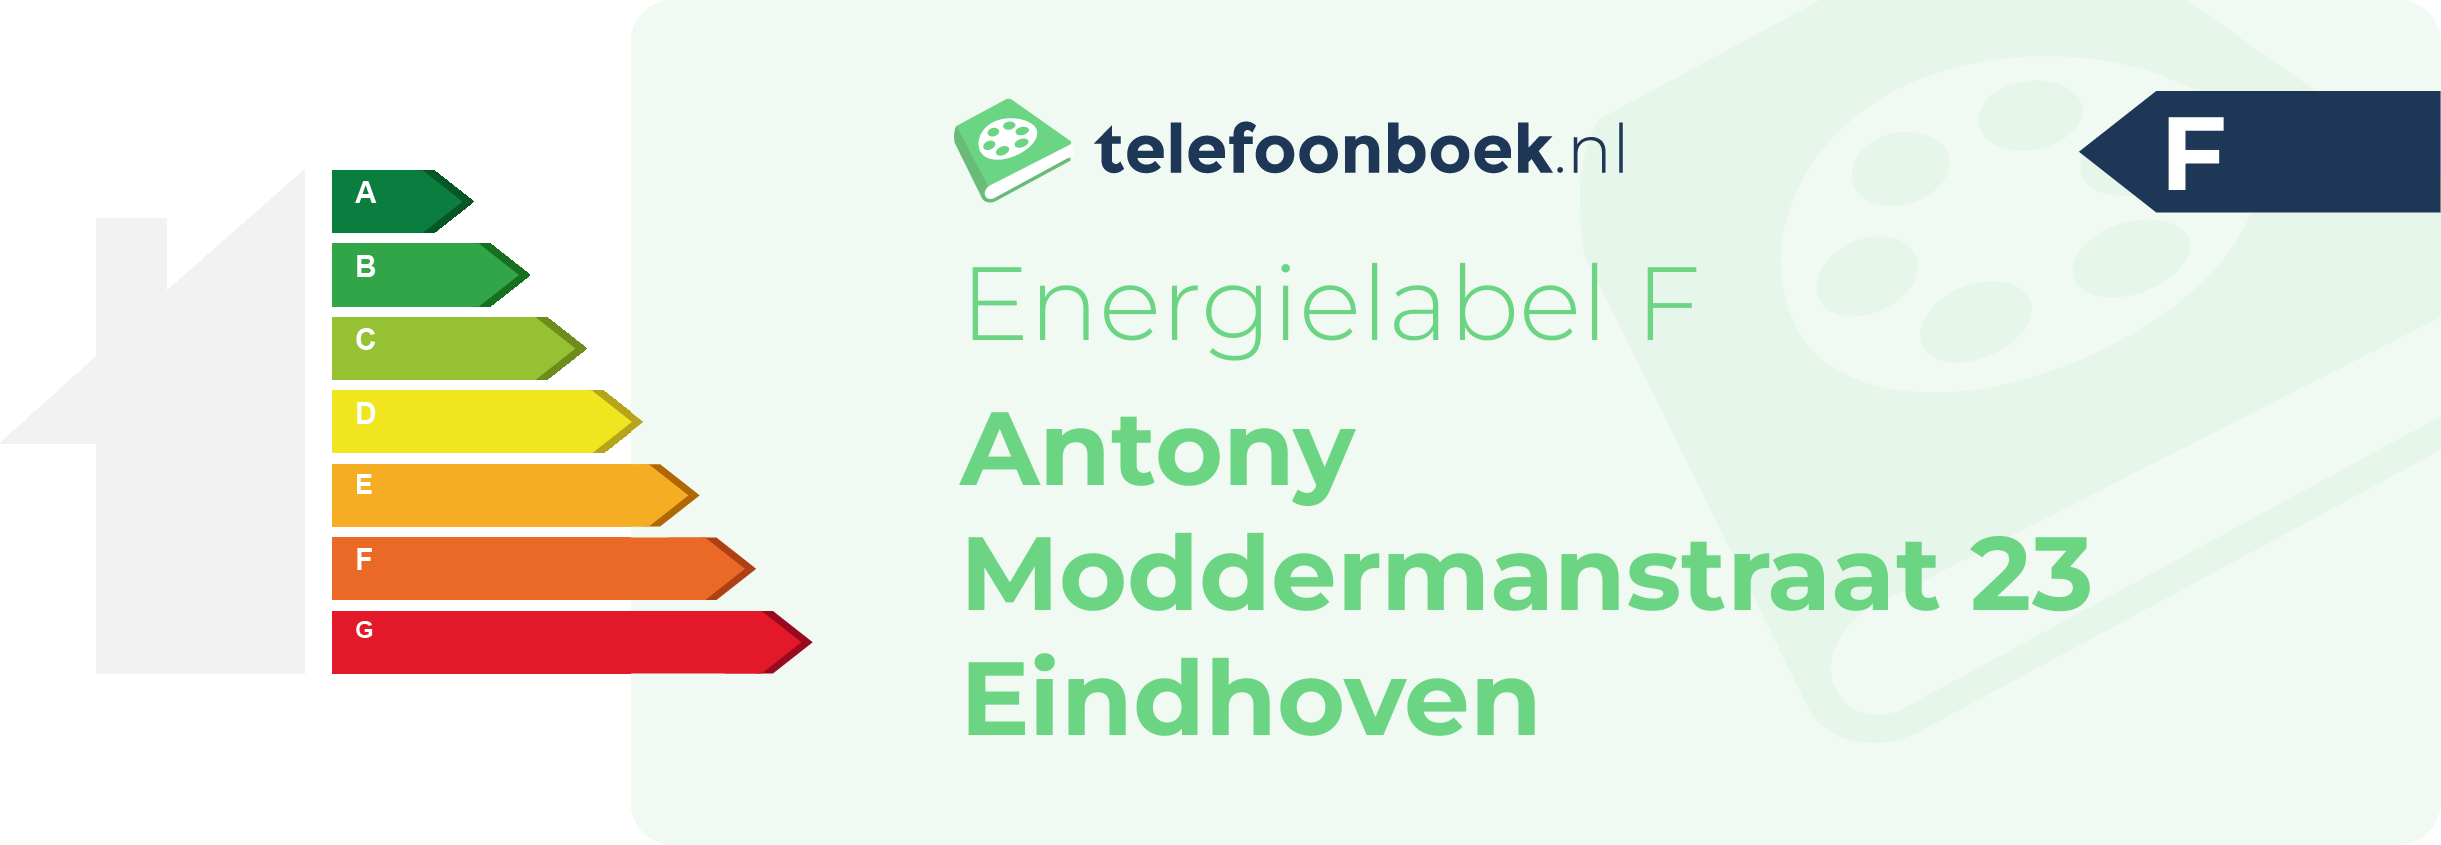 Energielabel Antony Moddermanstraat 23 Eindhoven